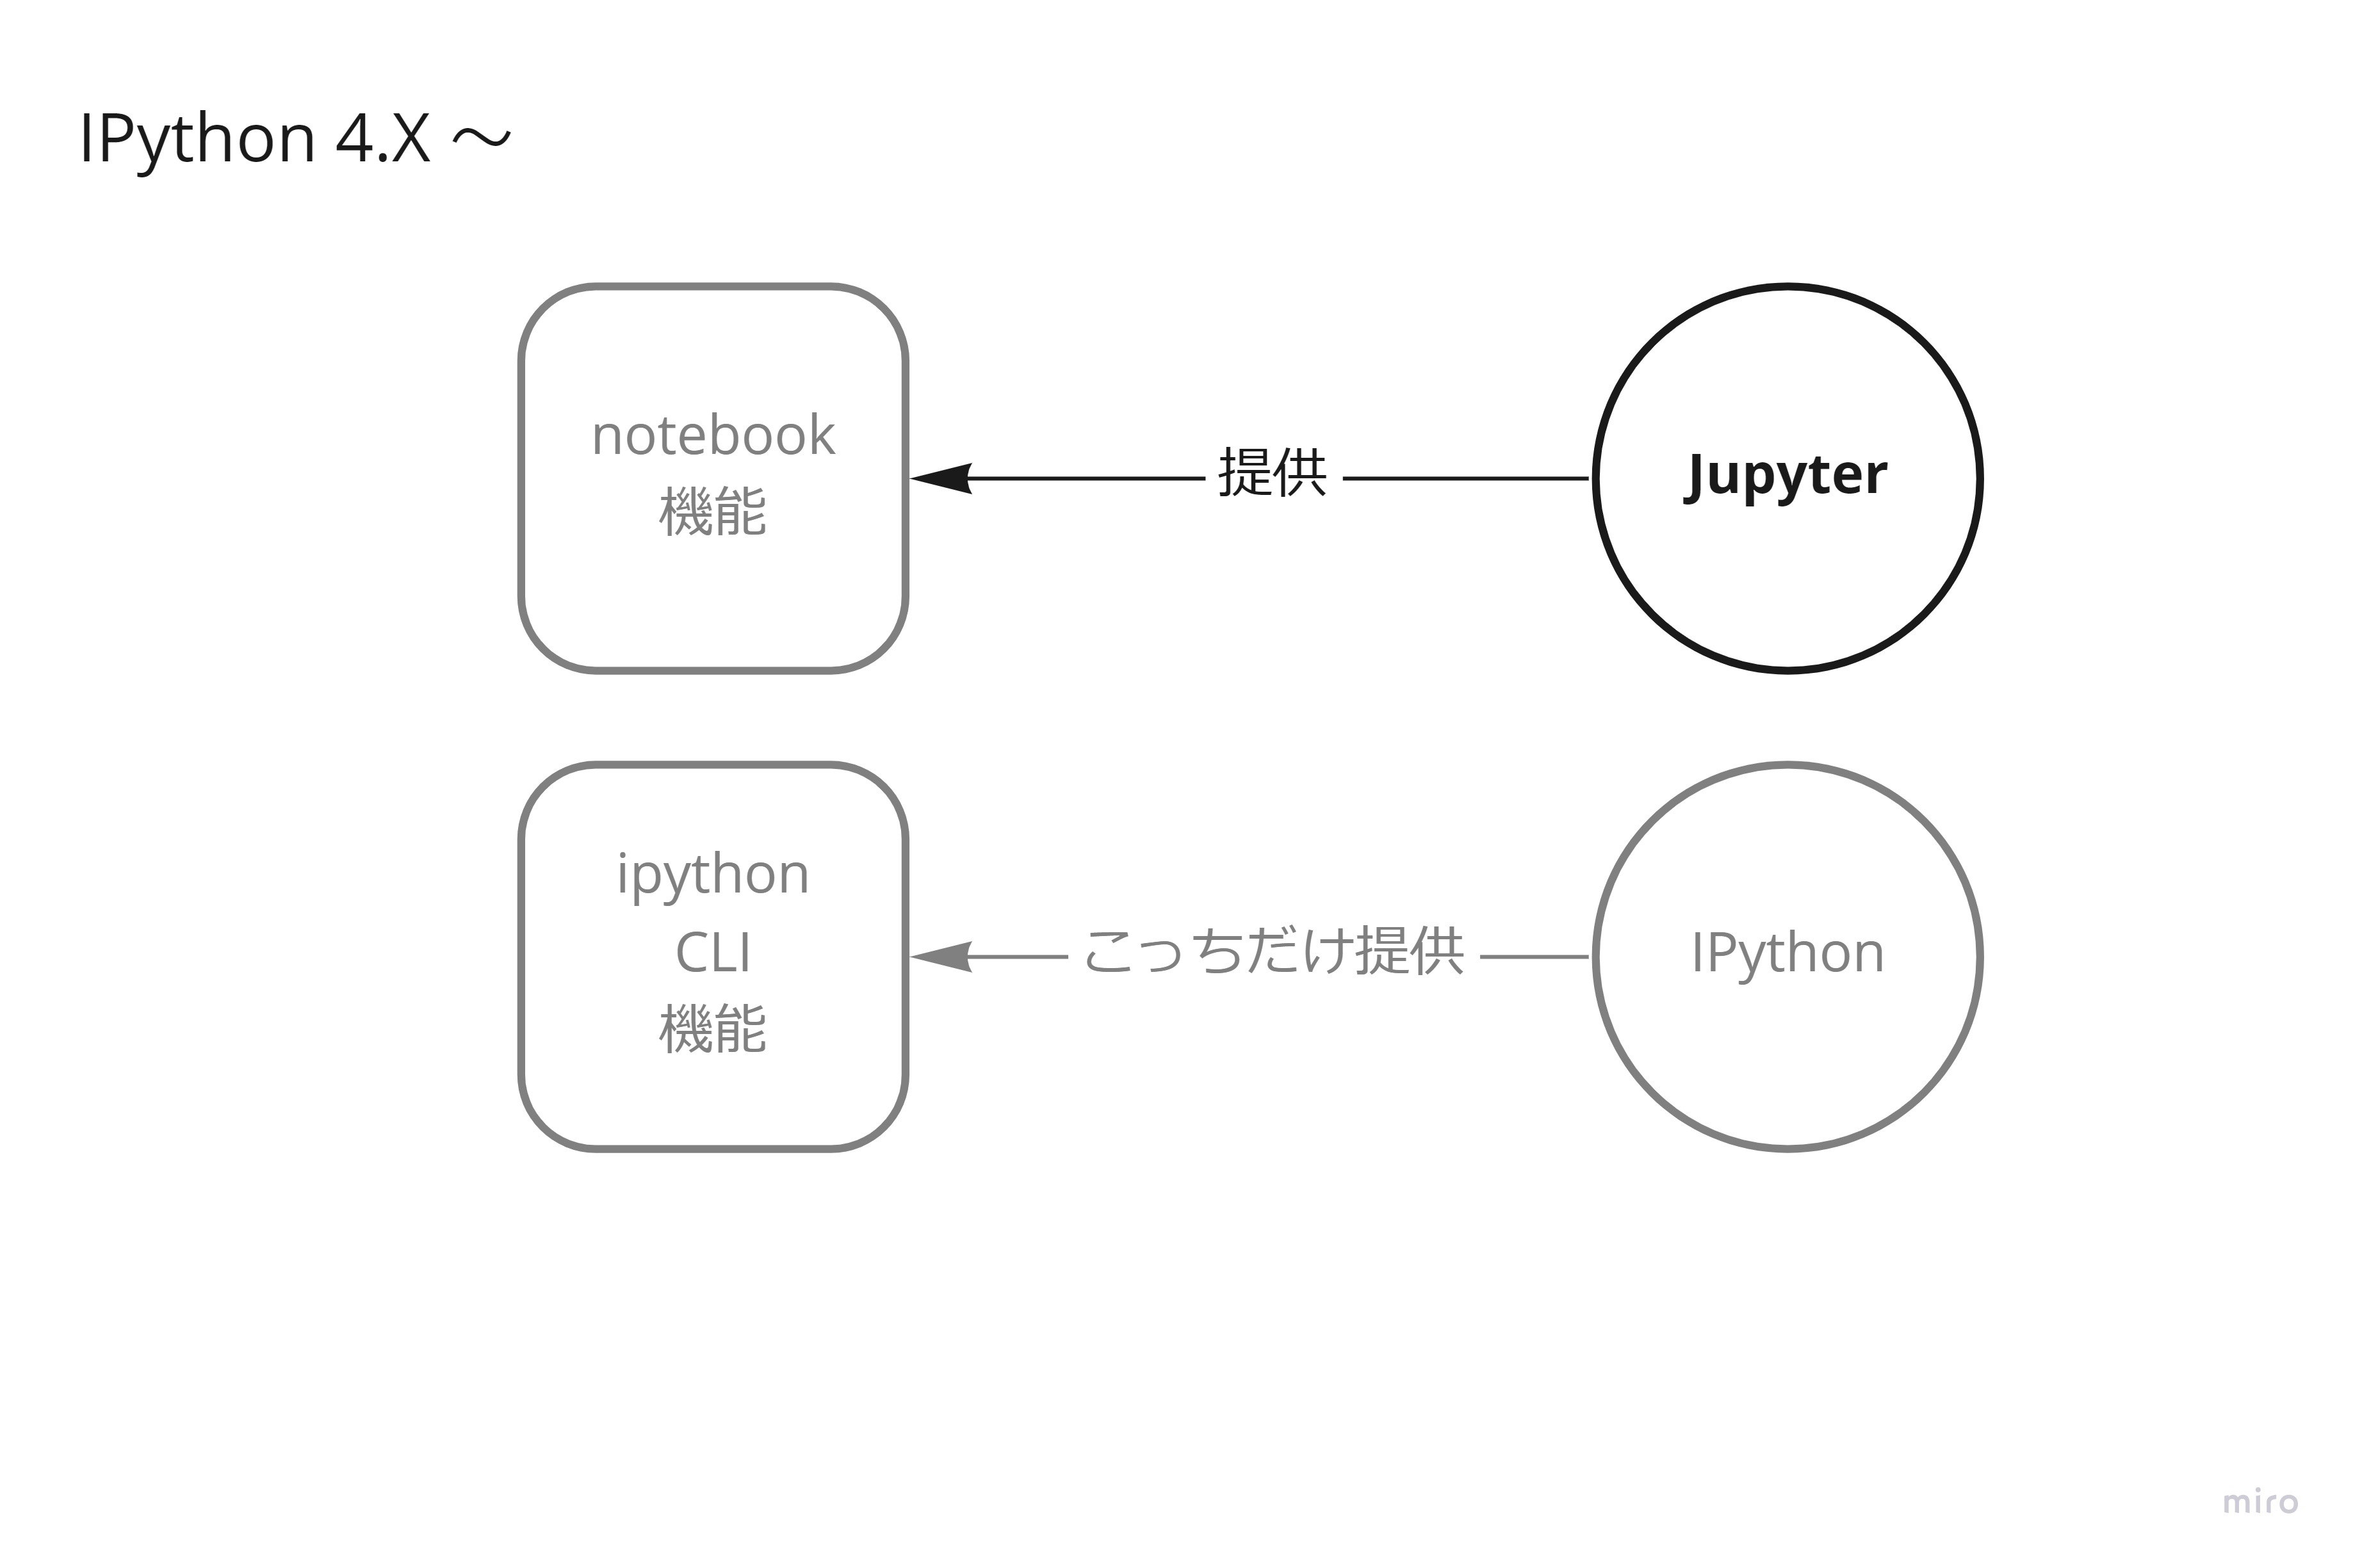 Copy of ipython 4.X (1).jpg